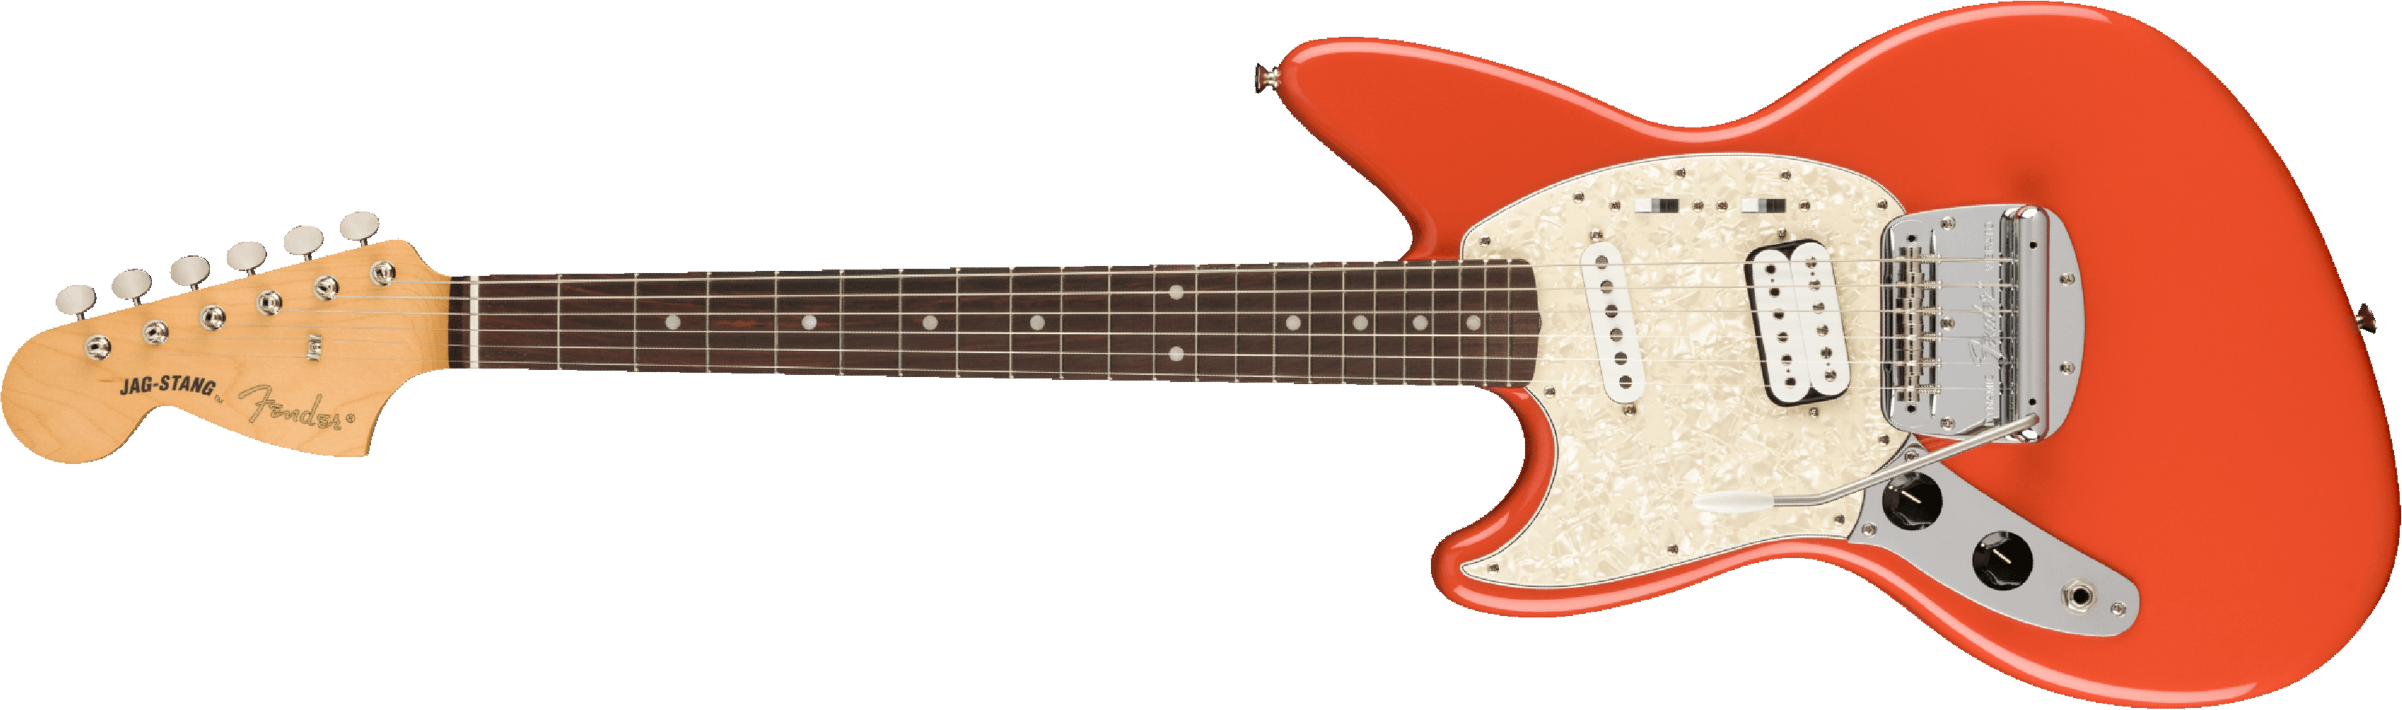 Fender Jag-stang Kurt Cobain Artist Gaucher Hs Trem Rw - Fiesta Red - Guitarra electrica para zurdos - Main picture